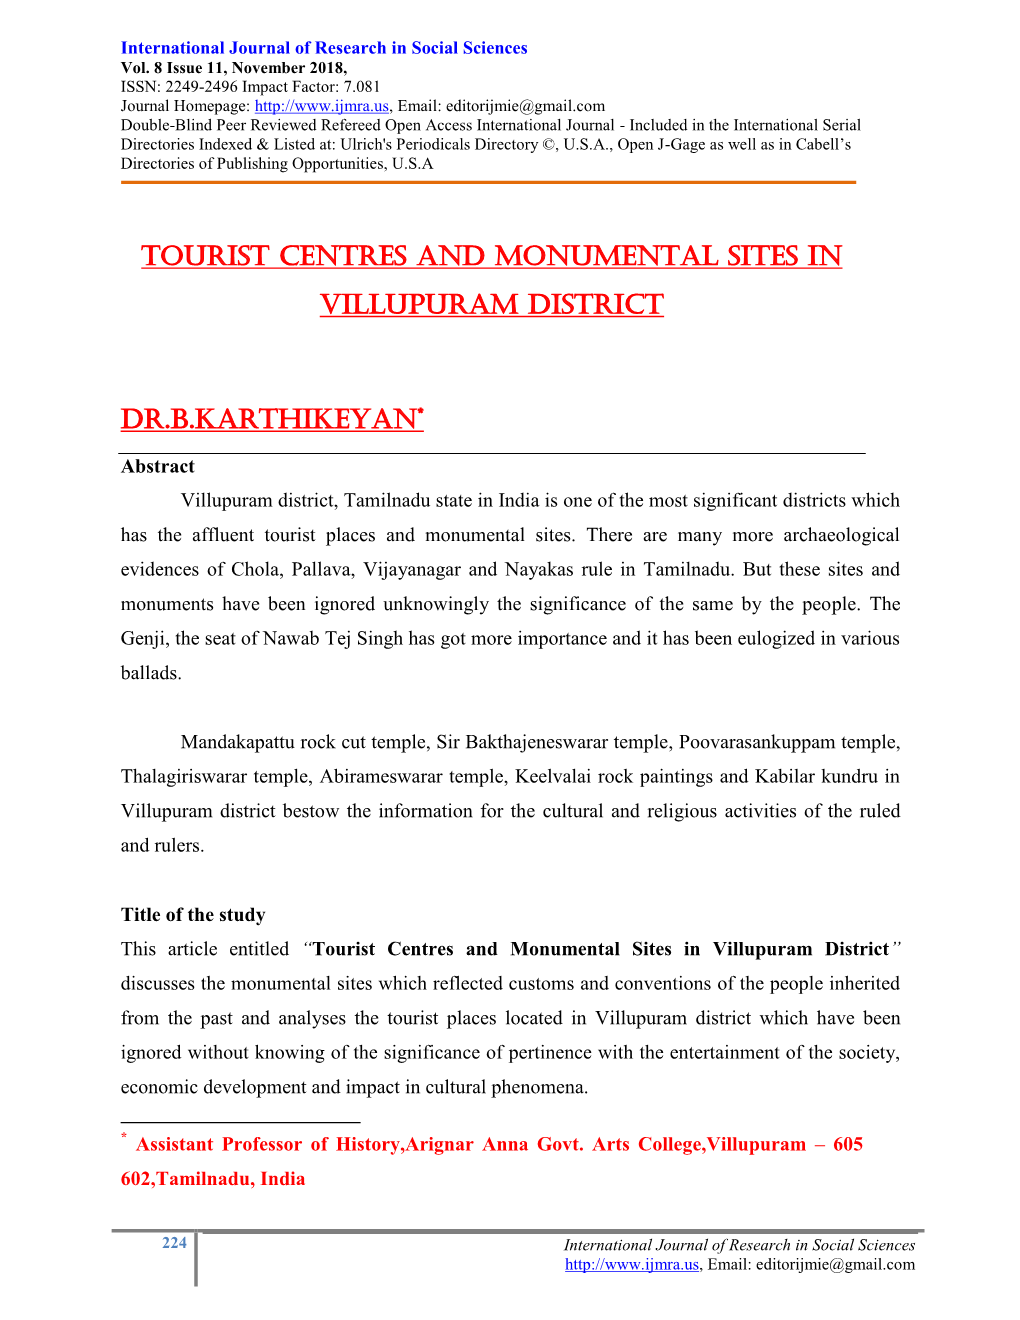 Tourist Centres and Monumental Sites in Villupuram District